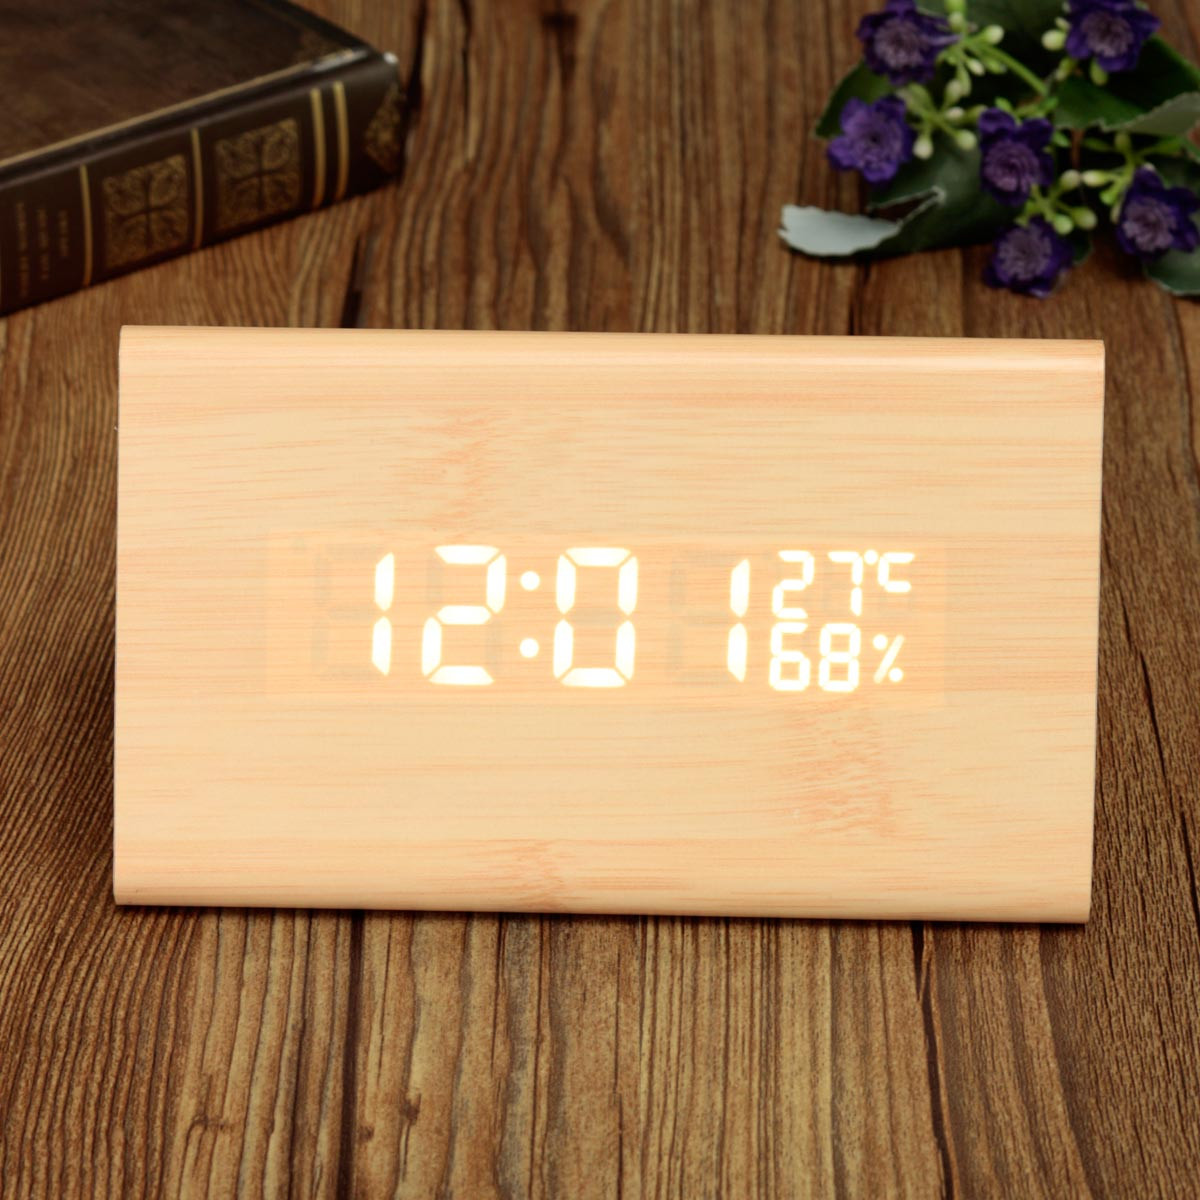 Voice-activated-Triangle-Alarm-Clock-Humidity-Temperature-Sensing-Wooden-Desk-Clock-LED-Digital-Disp-1926307-6